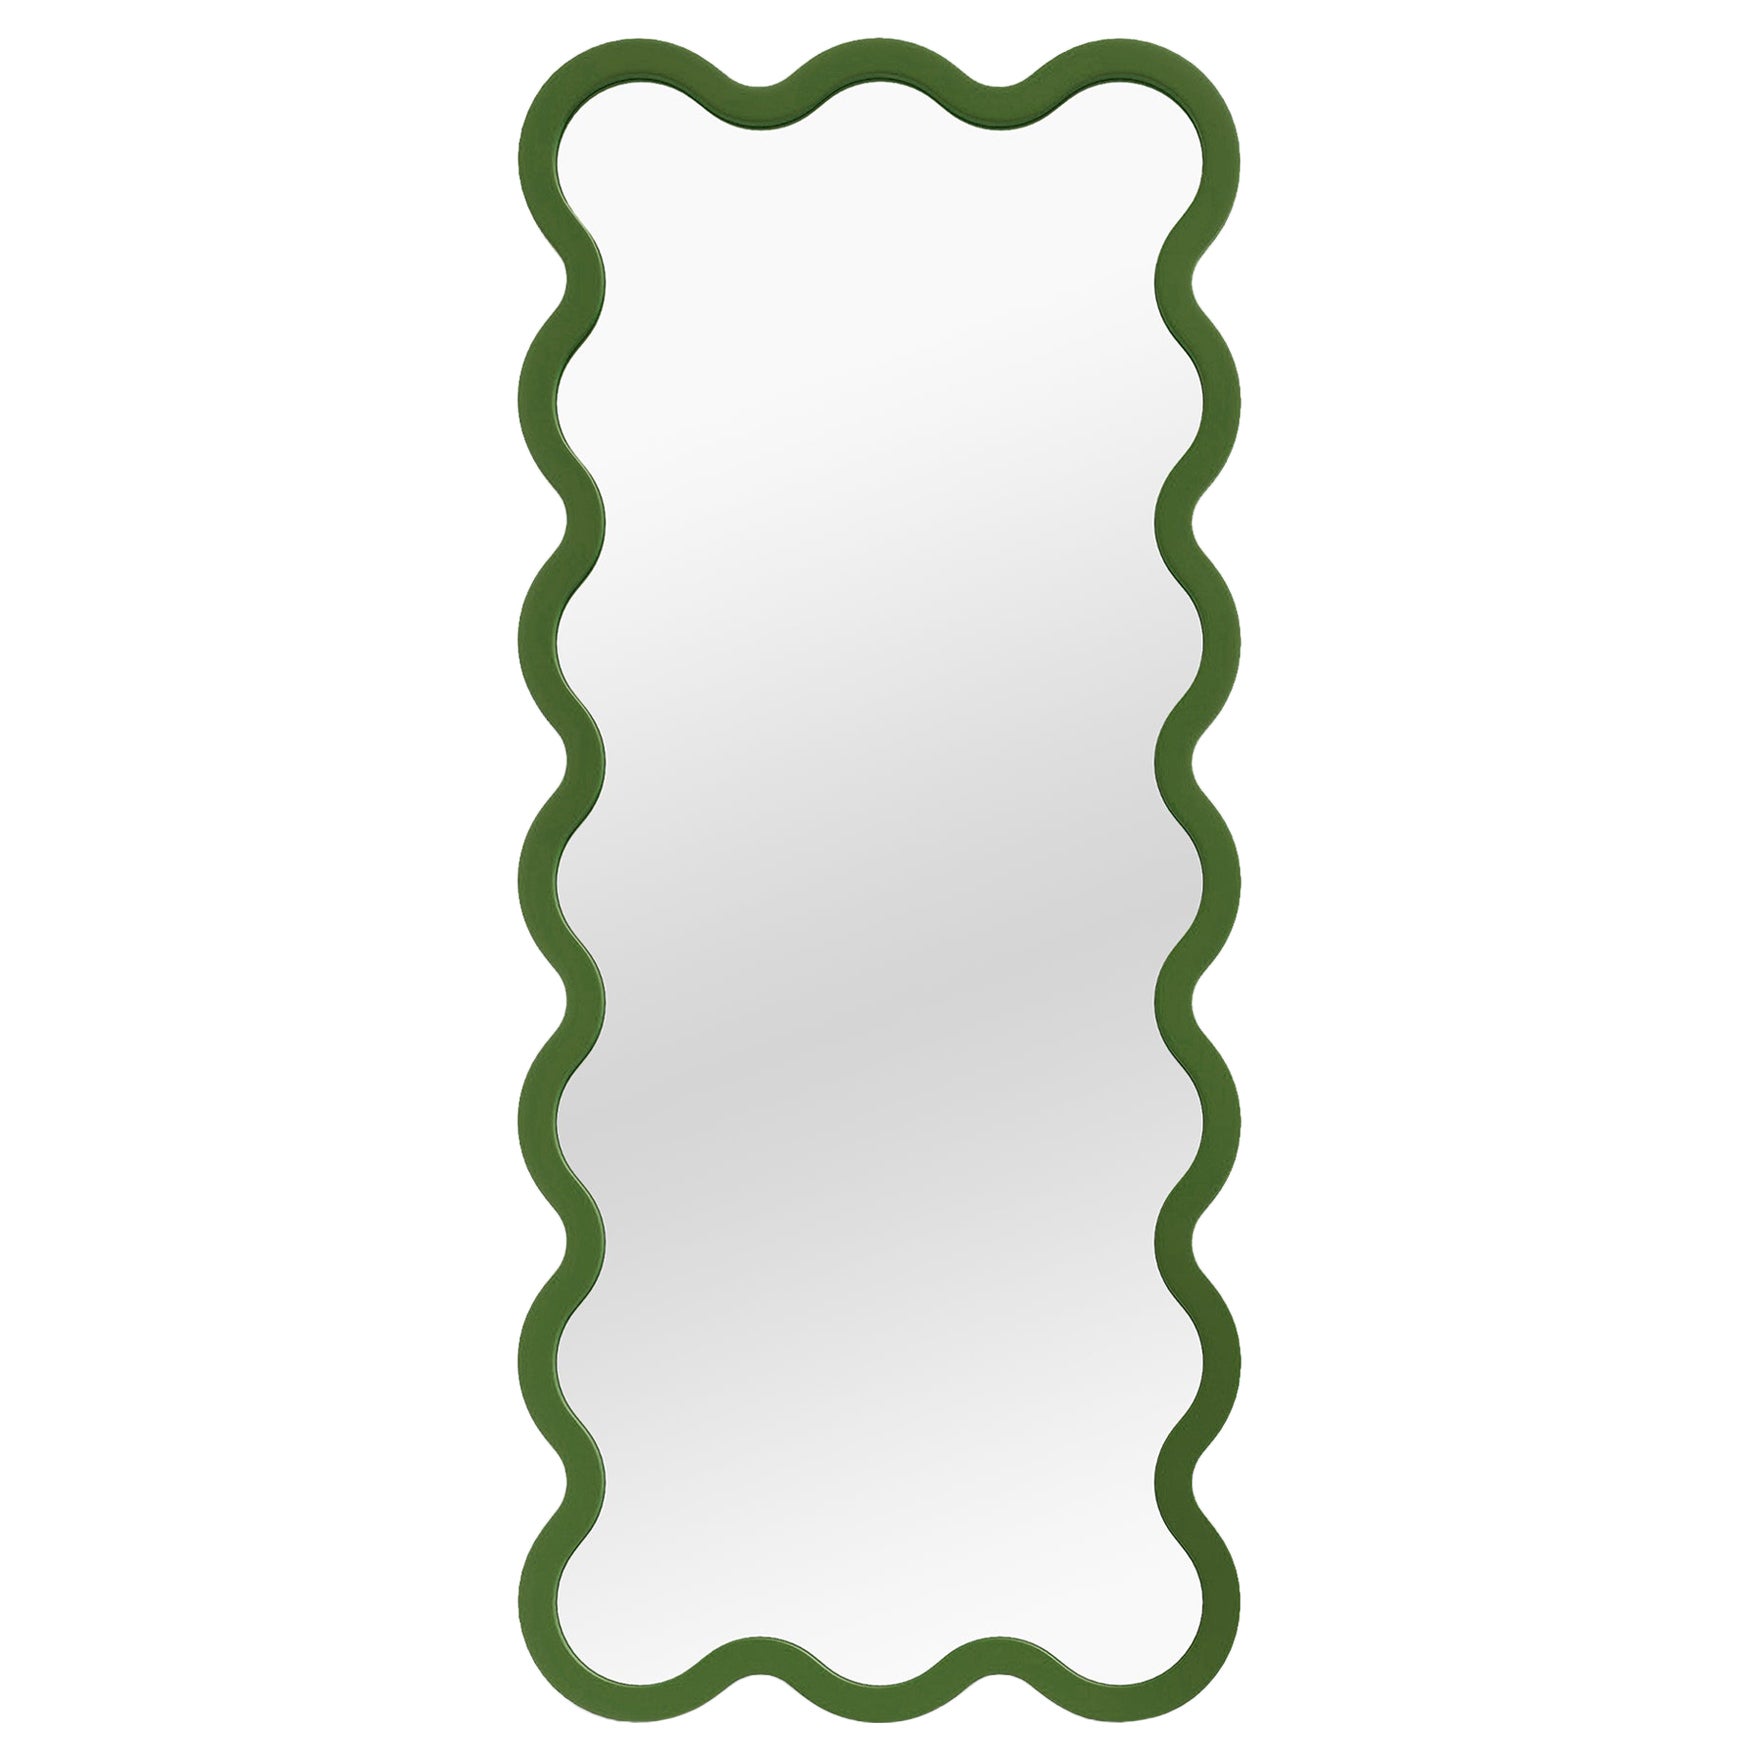 Miroir contemporain 'Hvyli 16' par Oitoproducts, cadre vert